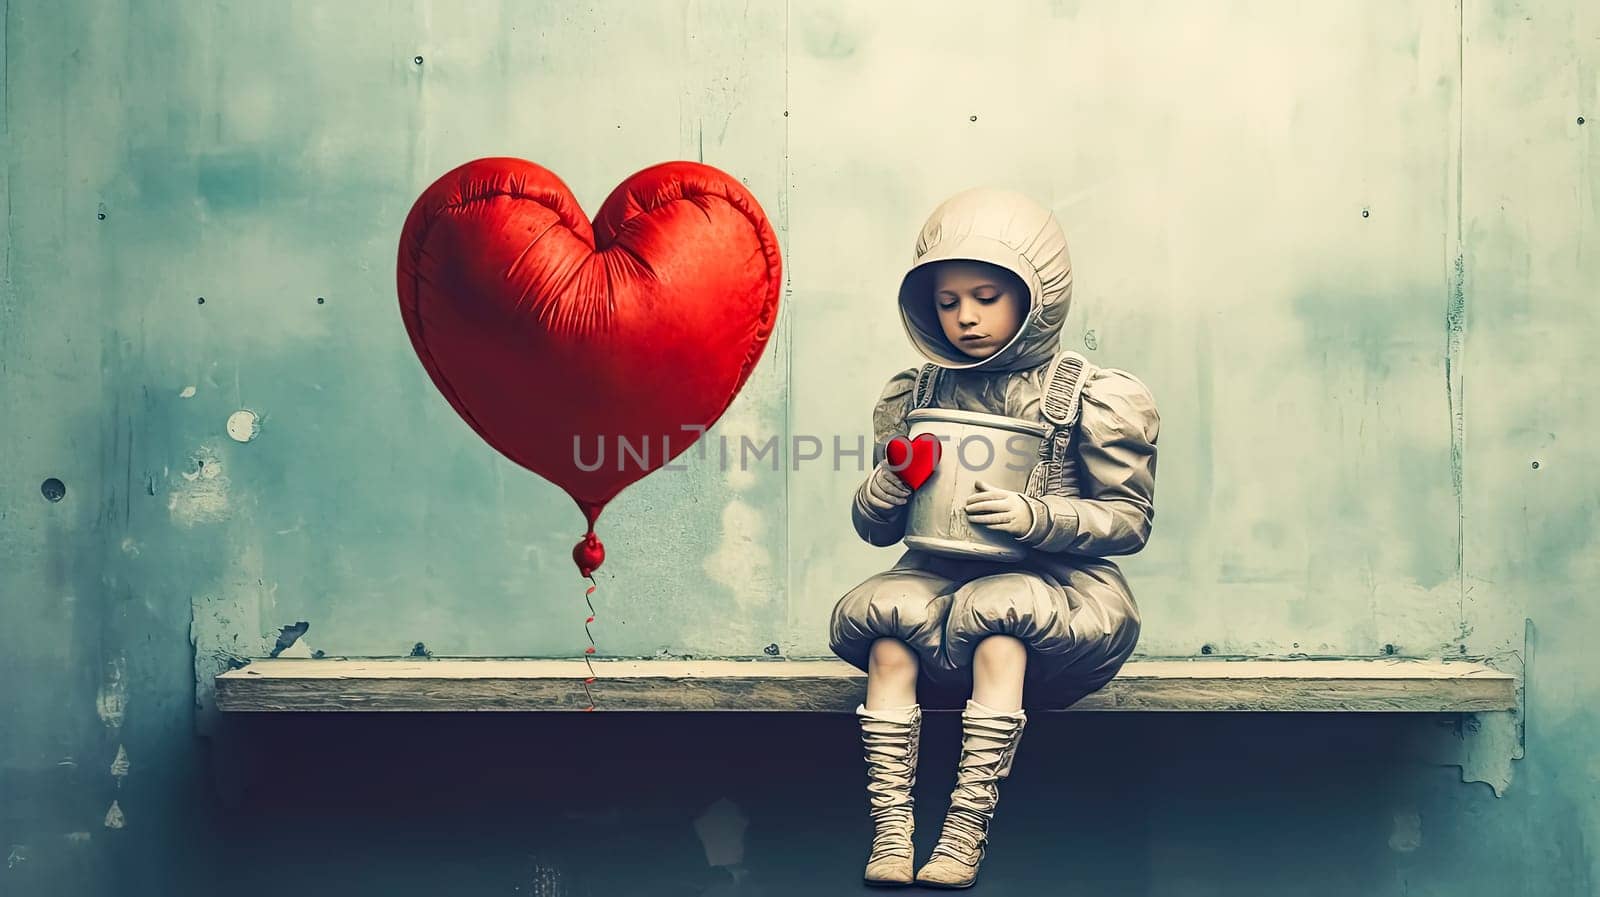 Kid in astronaut attire with a heart balloon by Alla_Morozova93